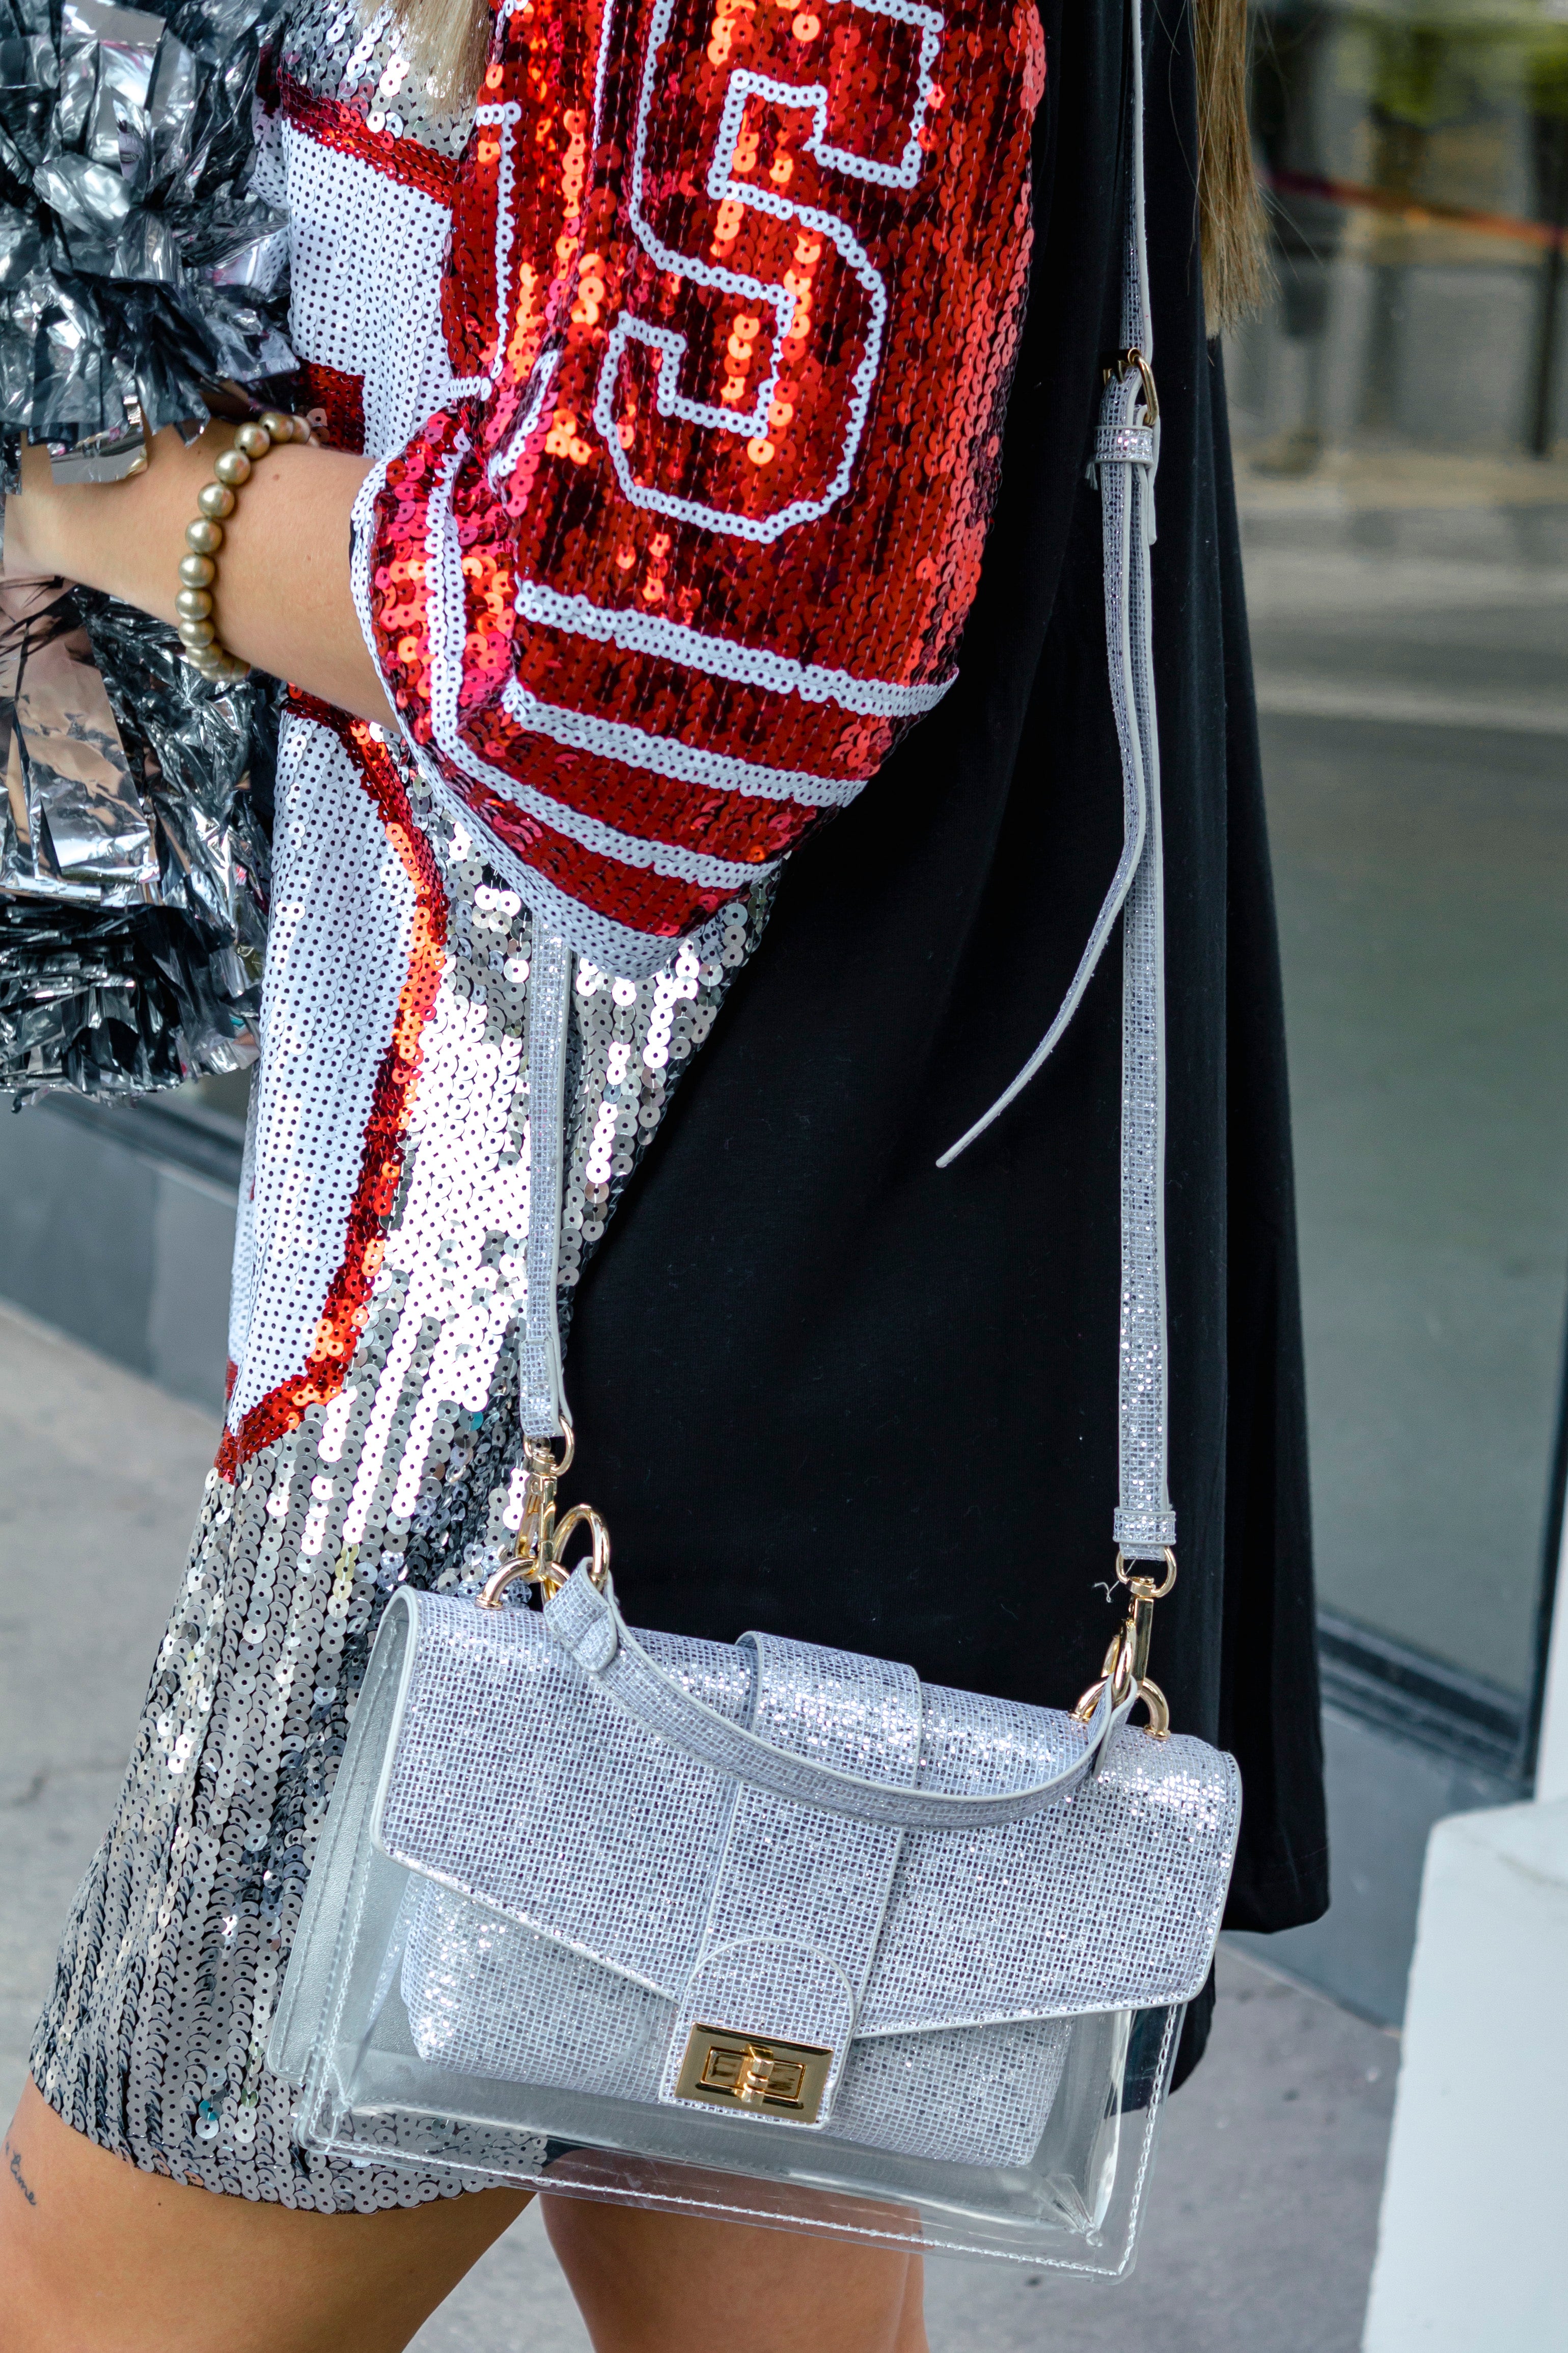 Buy Master Piece Crafts Sequin and Glass beads bag , handmade bag, makeup  bag, sequin bag with shoulder strap - Crossbody bag, Clutch bag Online at  Best Prices in India - JioMart.